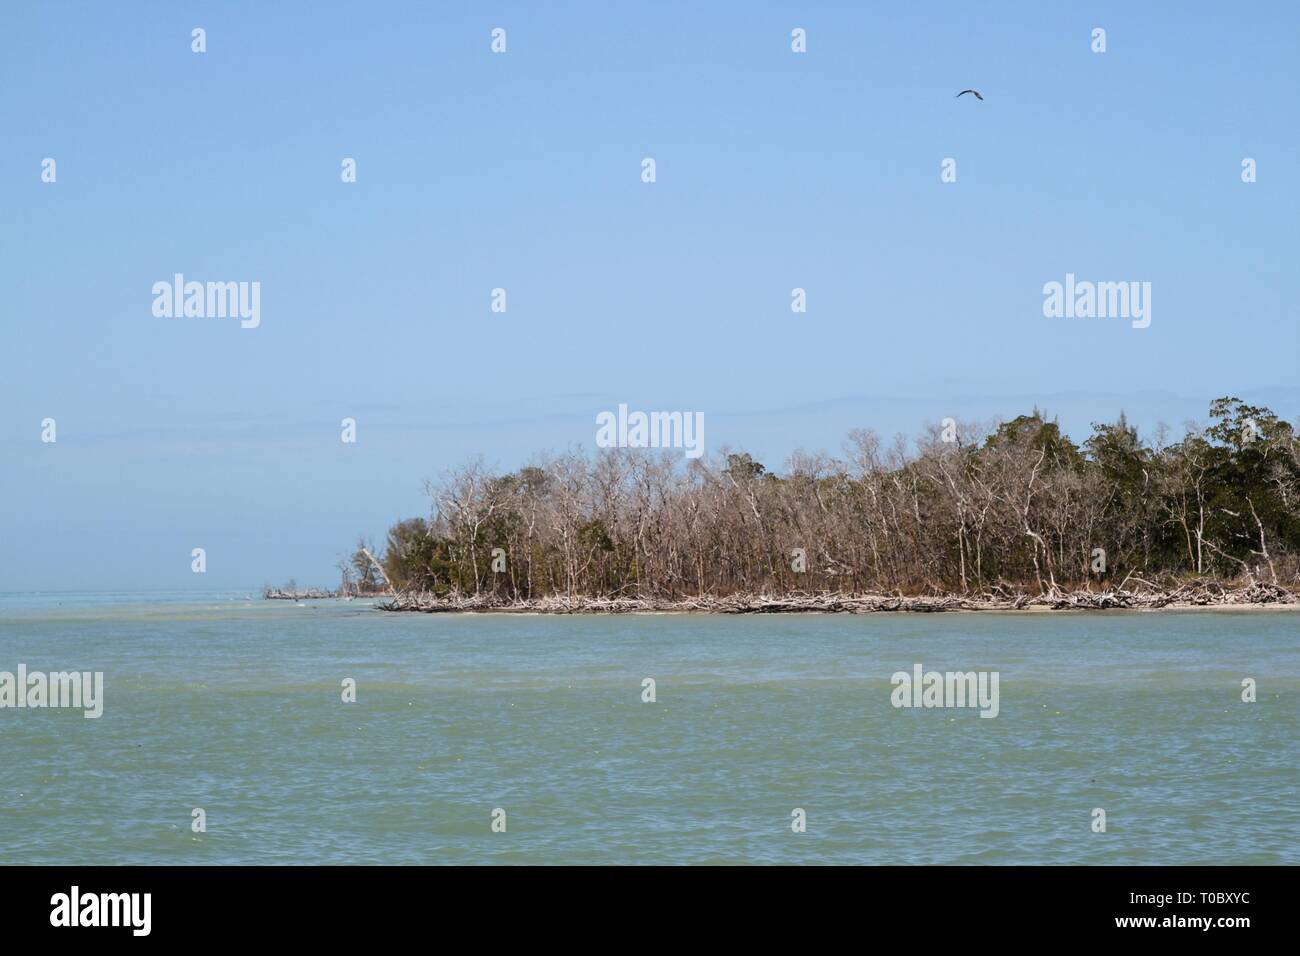 Mangrove island along coast of Florida Stock Photo